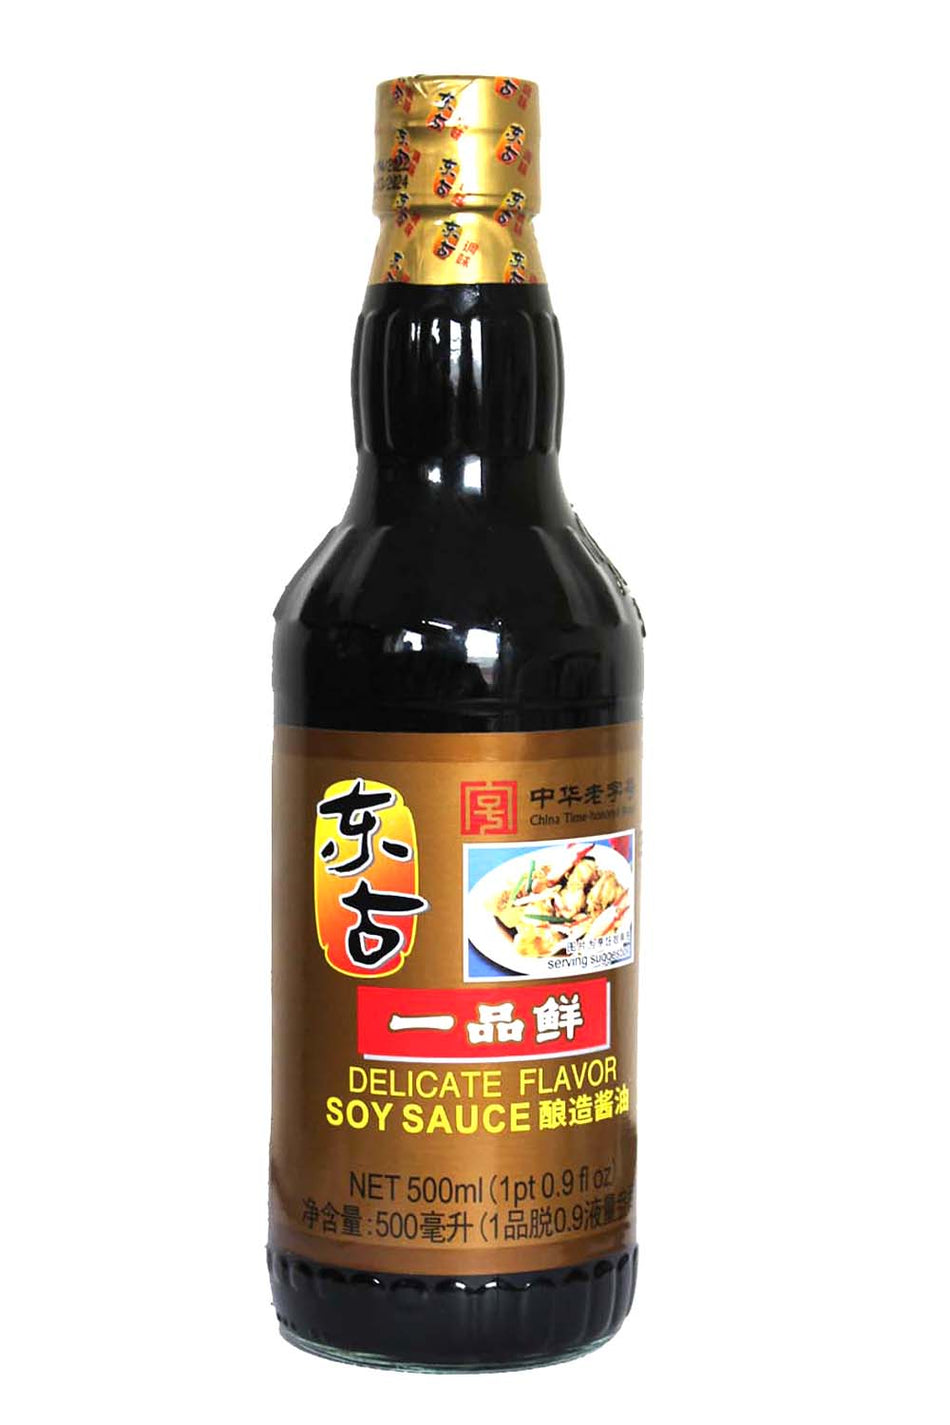 Donggu soy sauce